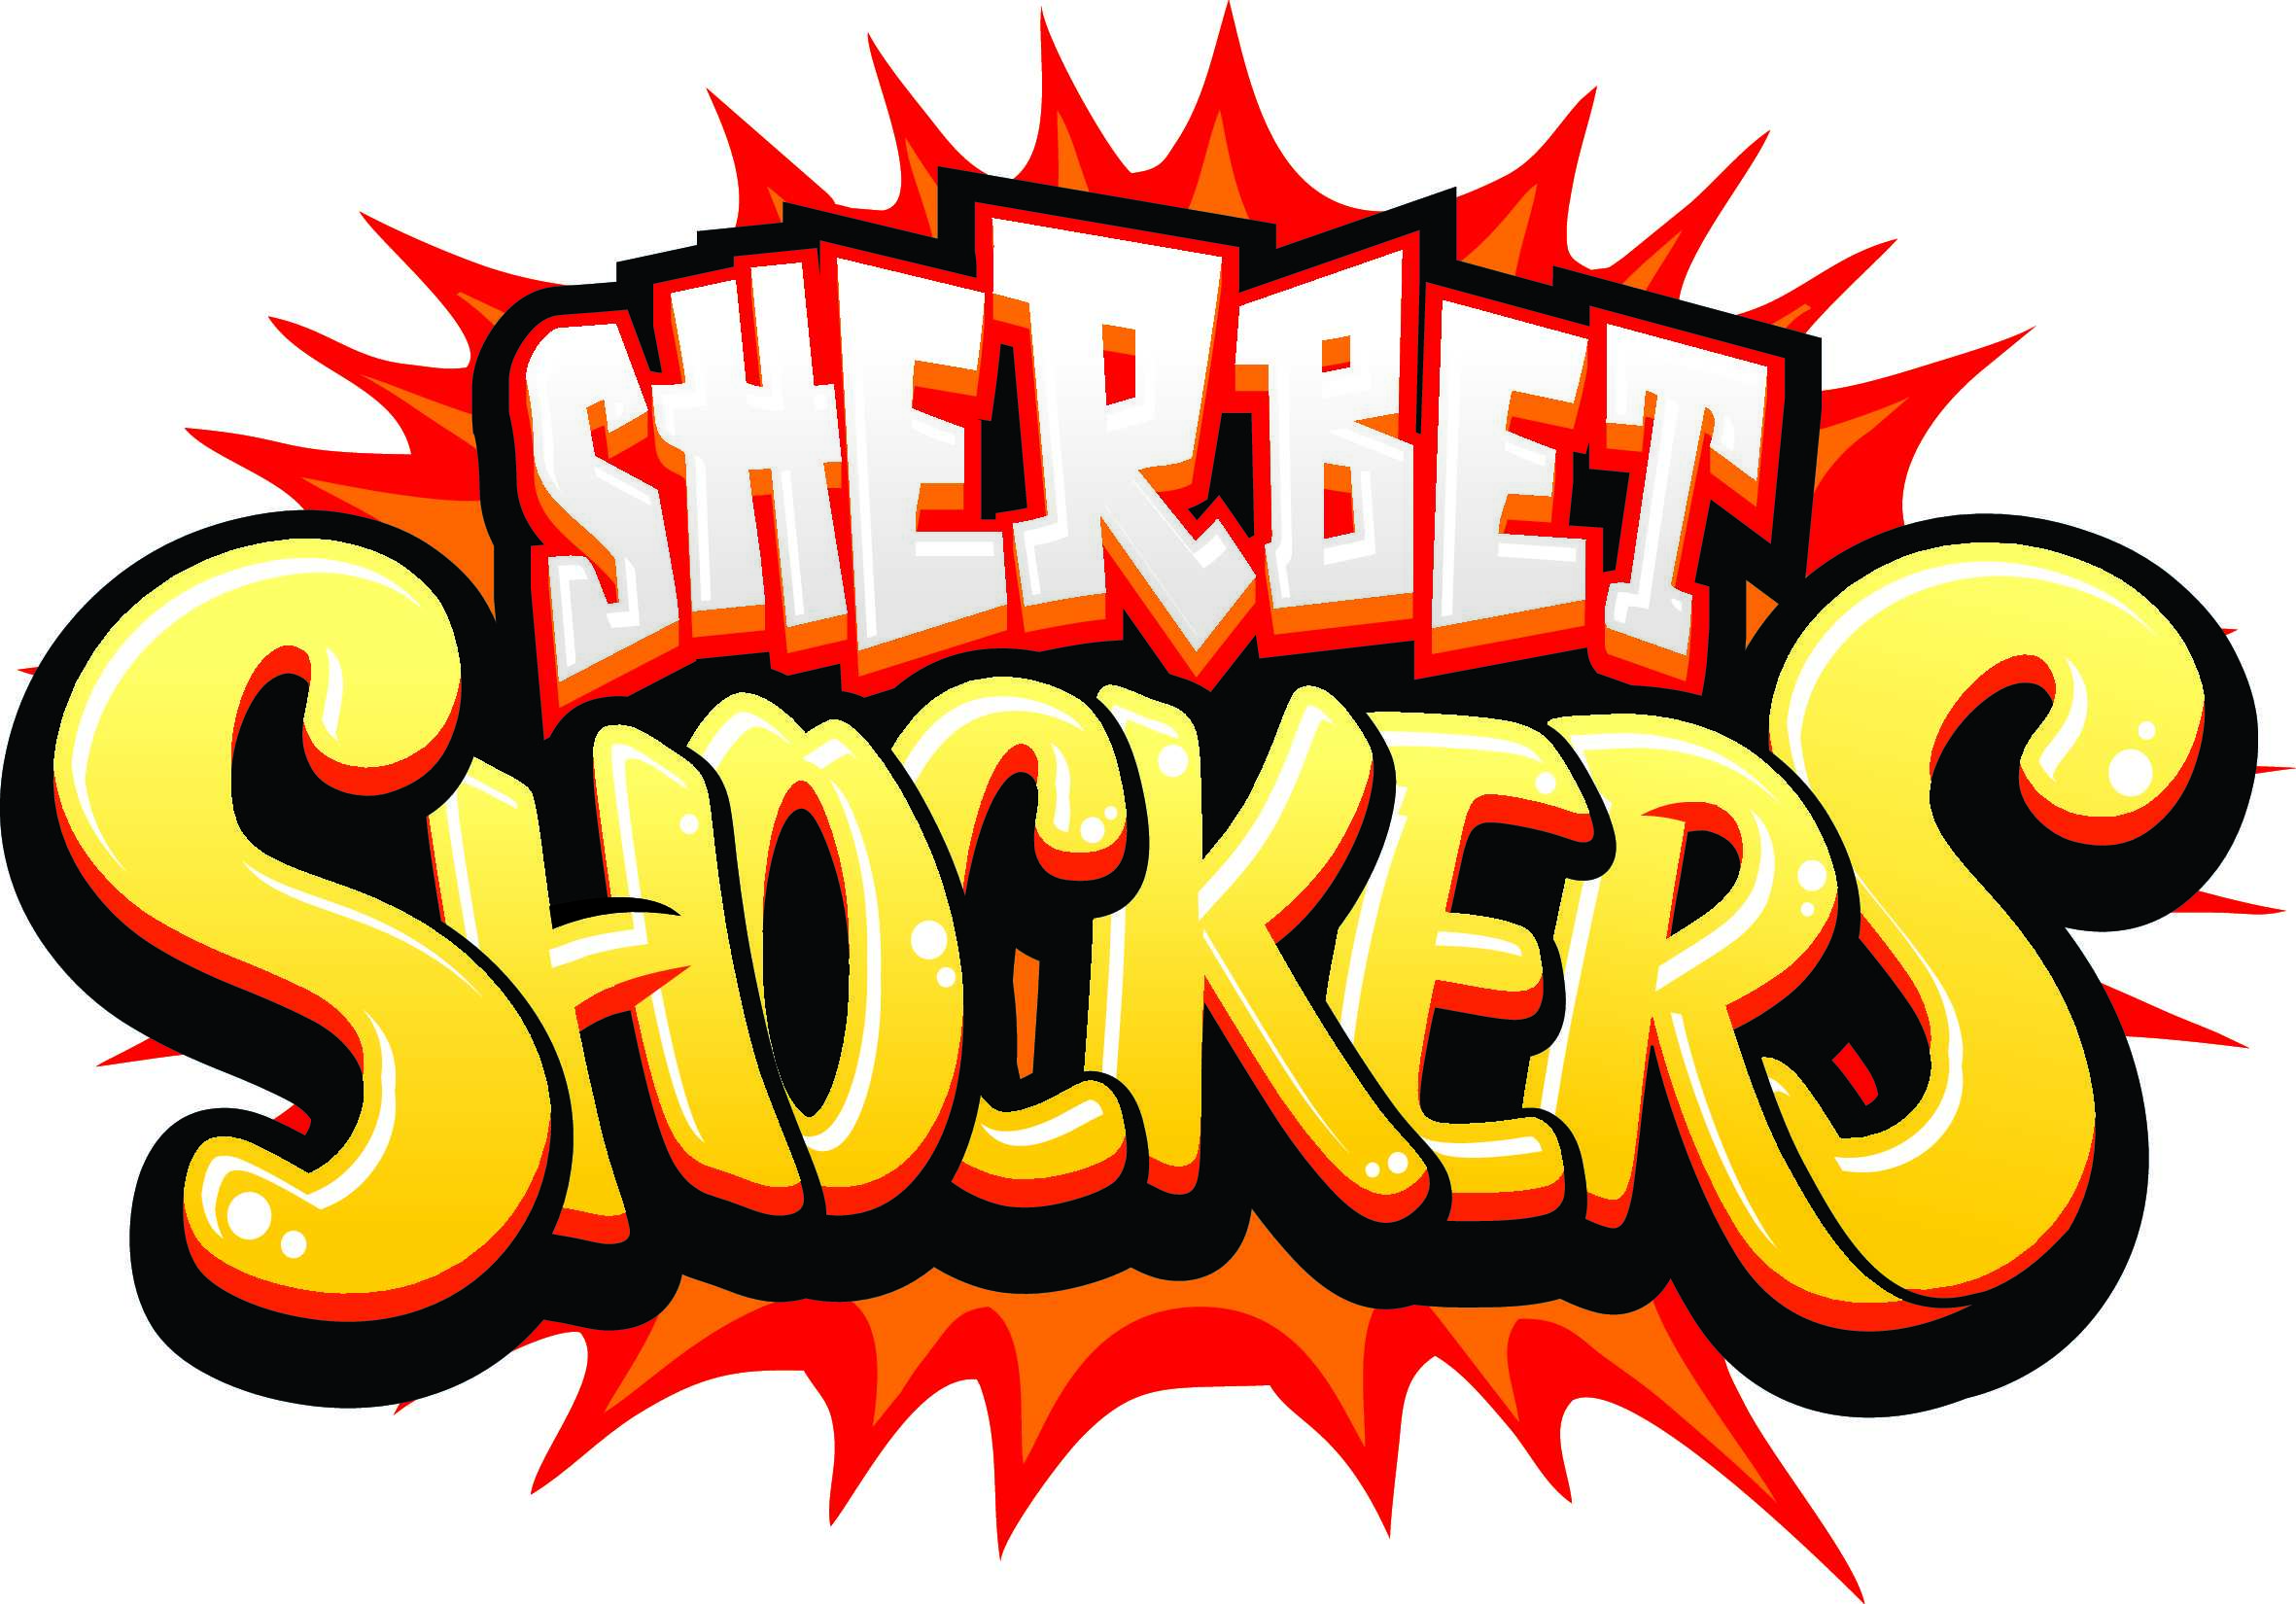 Sherbet Shockers